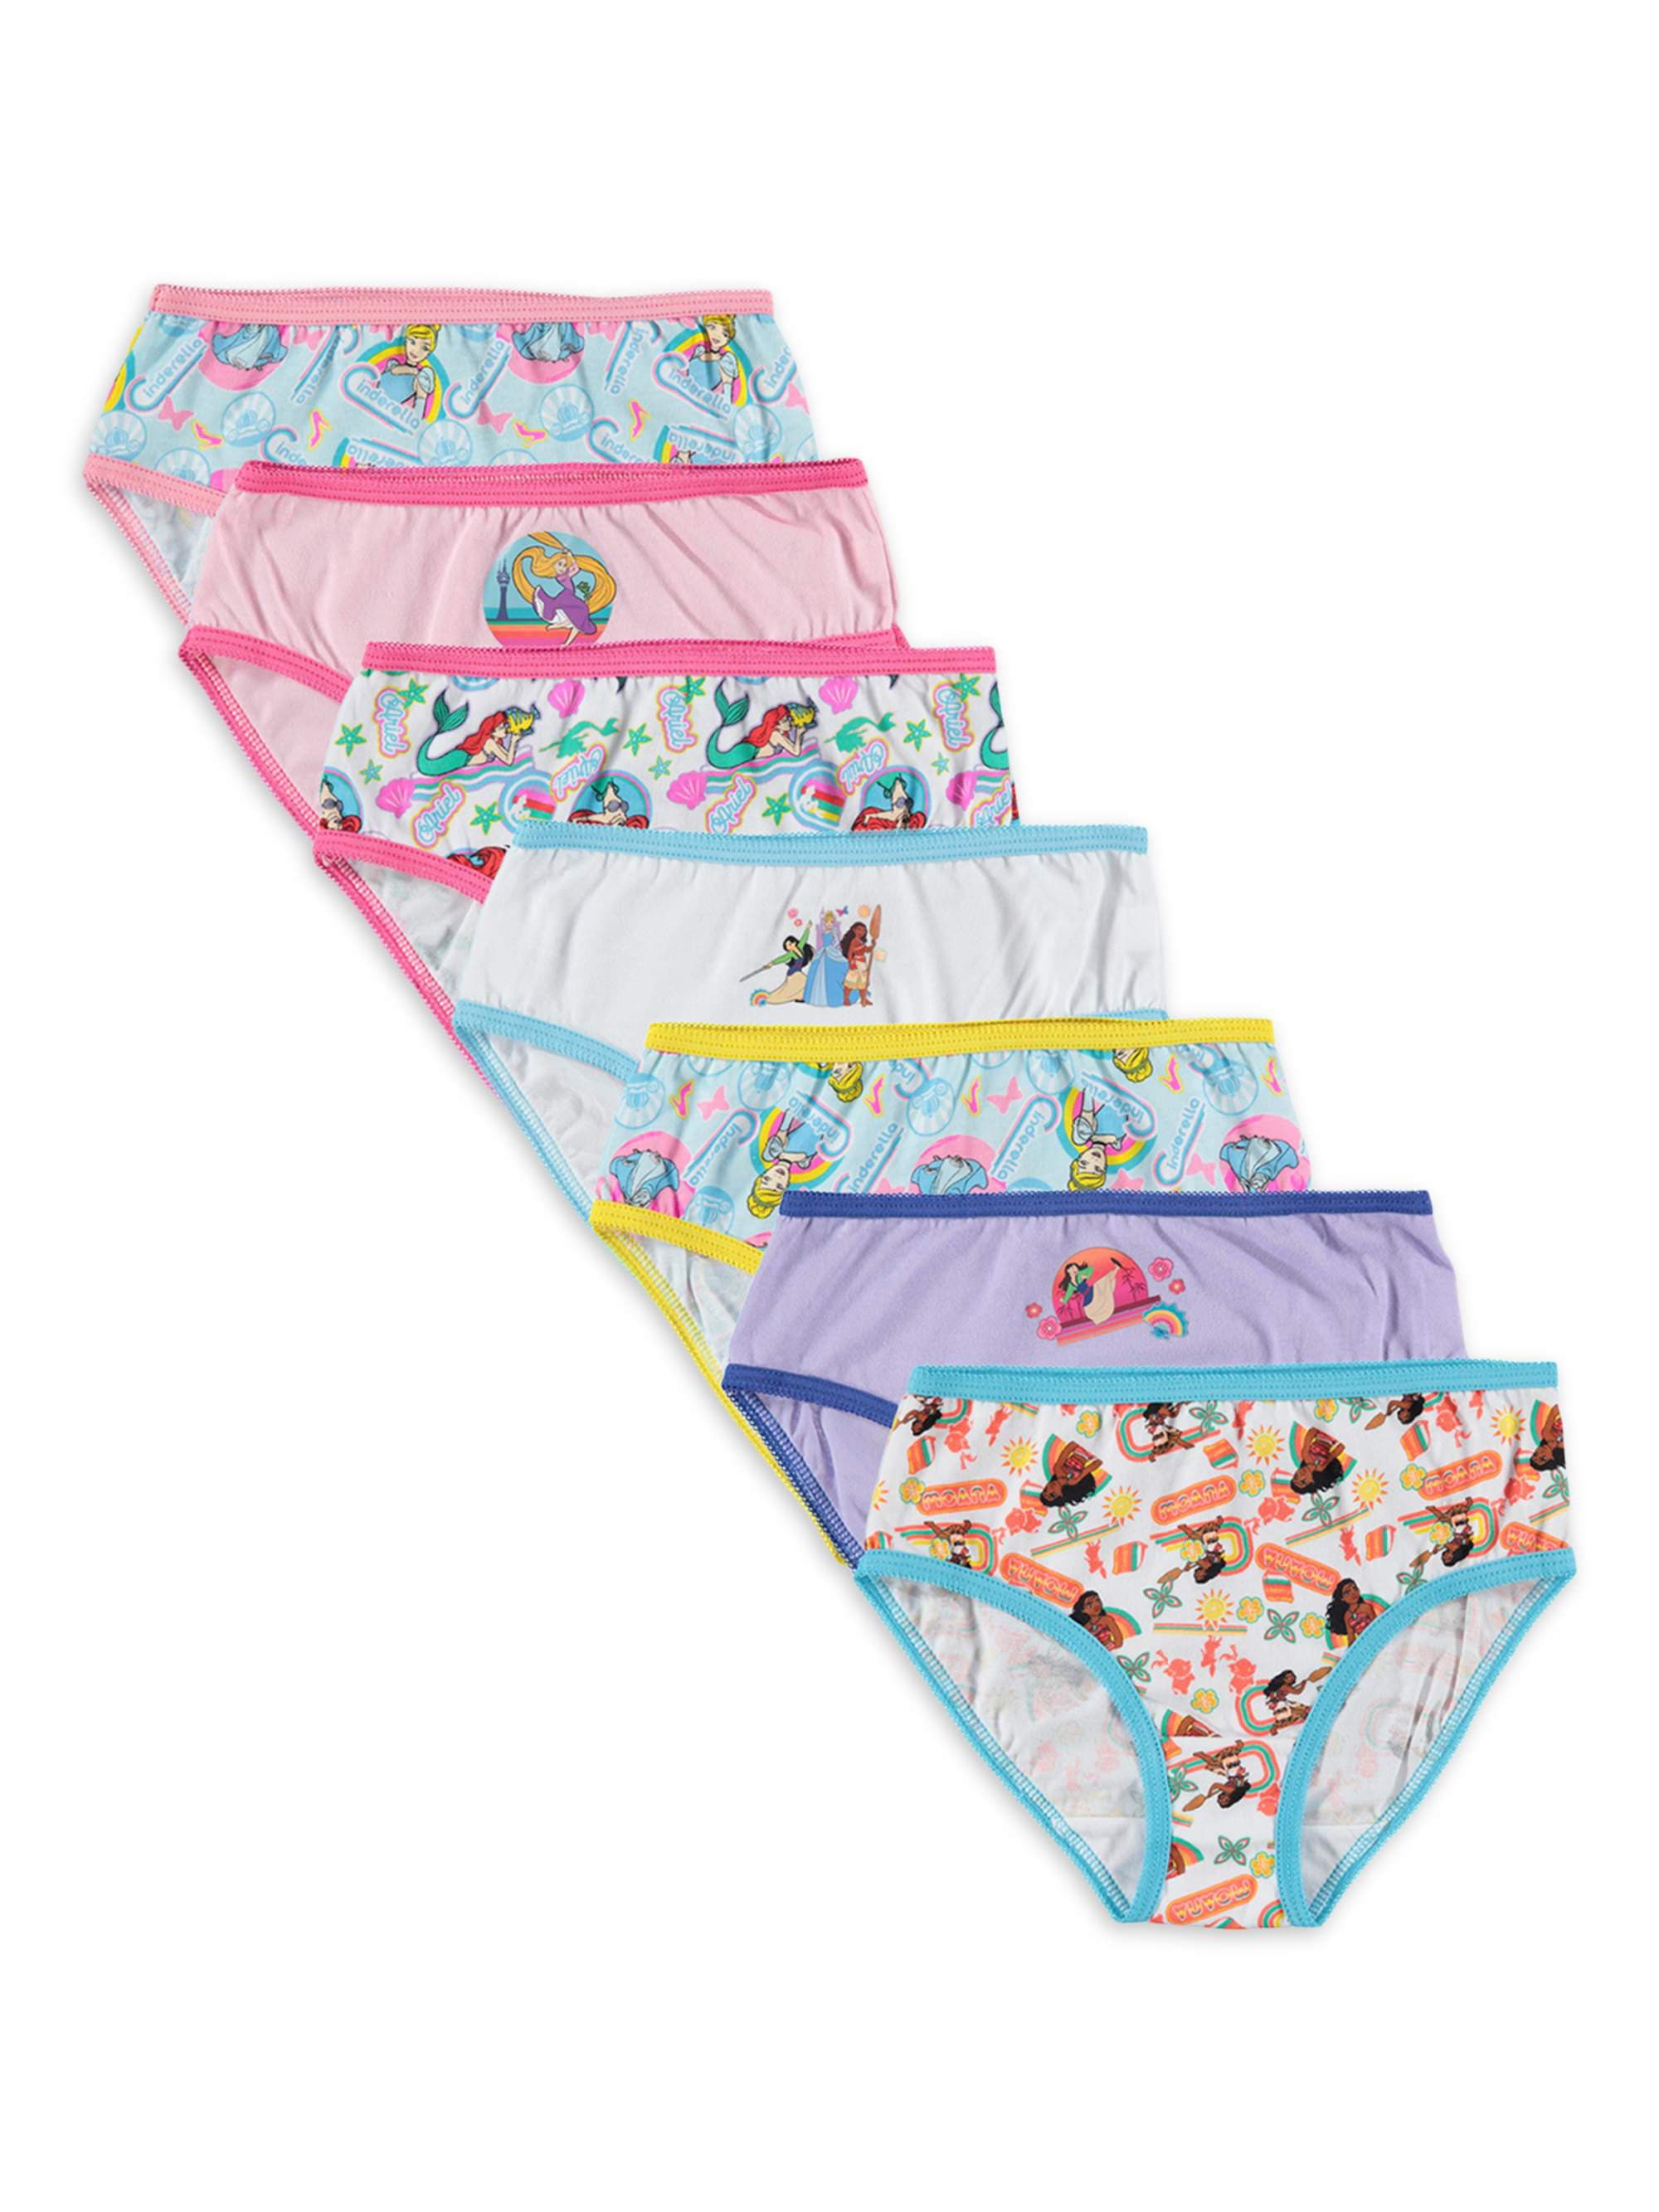 Disney Princess Girls Briefs Underwear 7-Pack, Sizes 4-8 - DroneUp Delivery